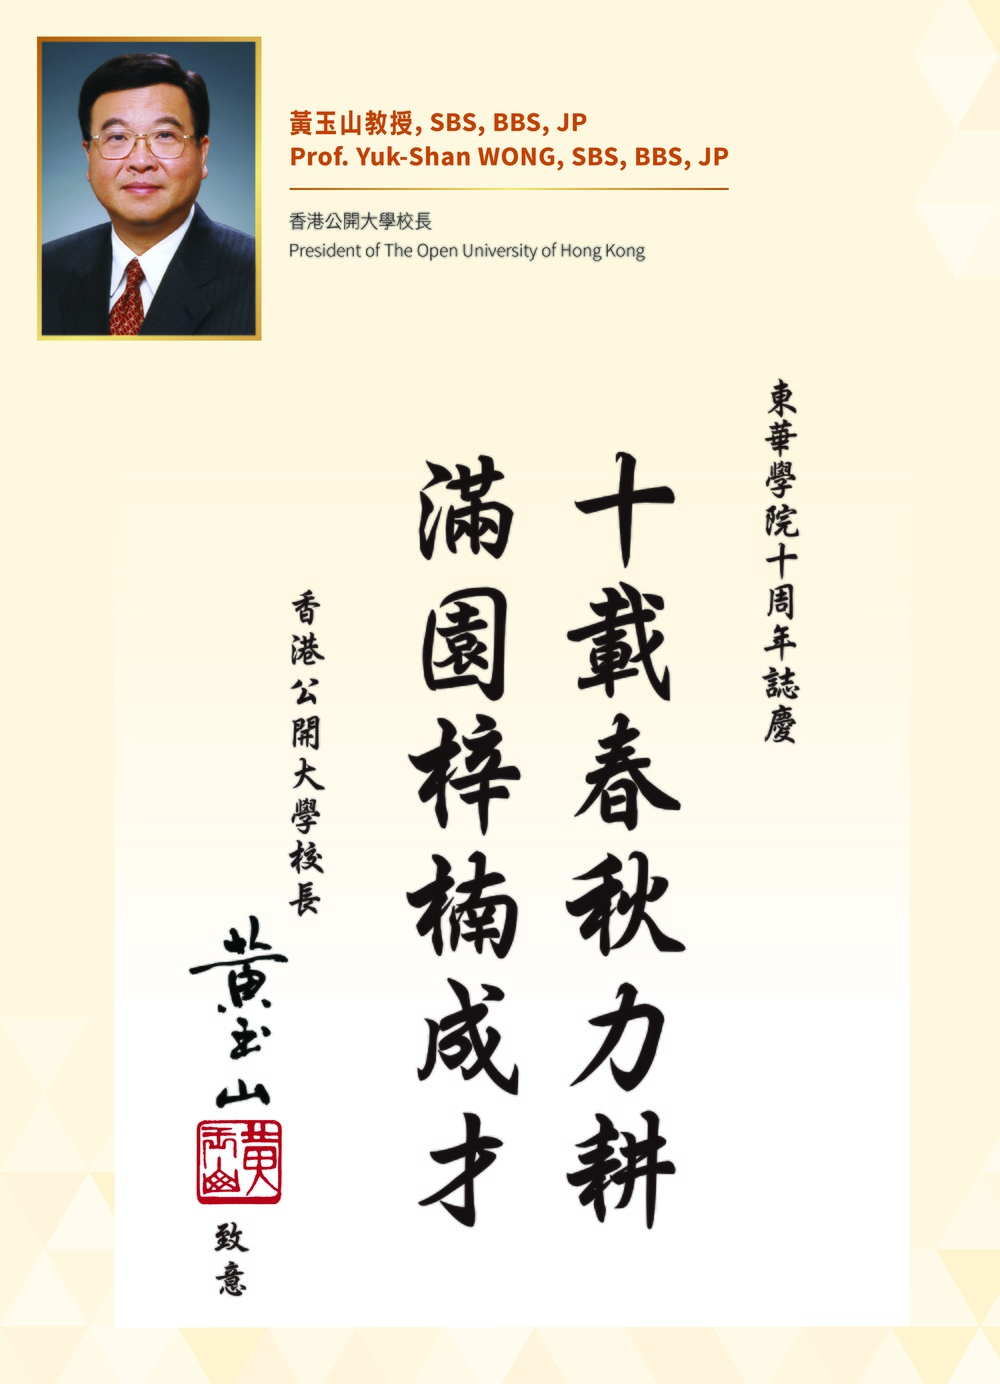 President of The Open University of Hong Kong